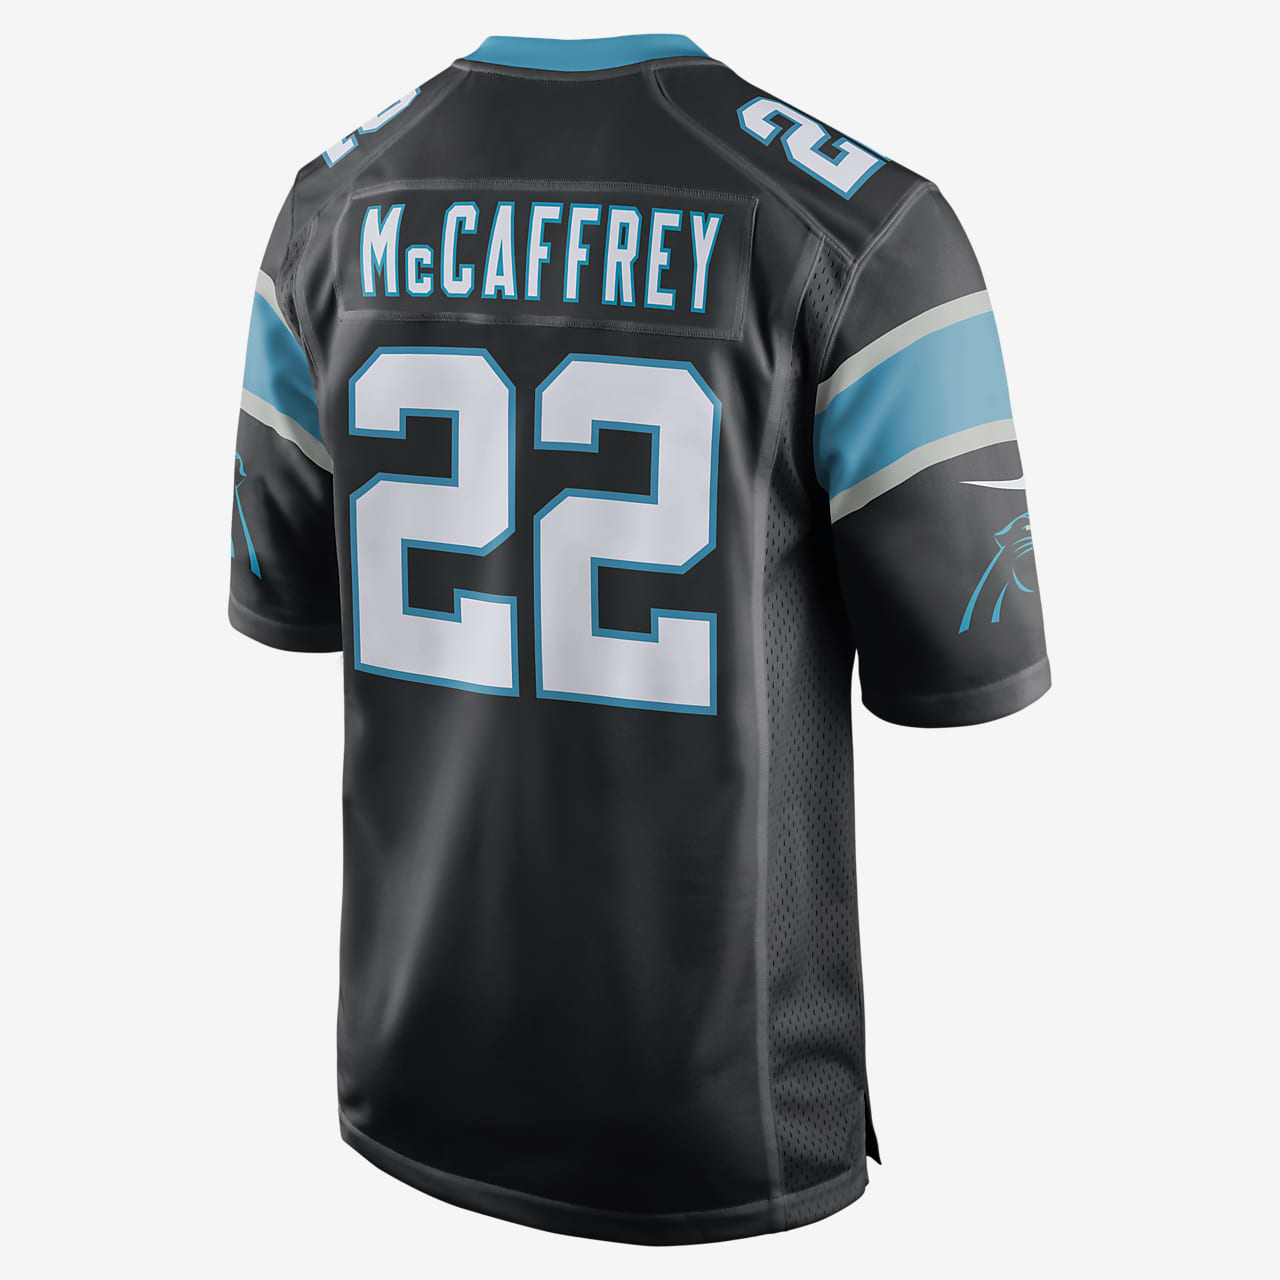 NFL Carolina Panthers (McCaffrey) Men's 